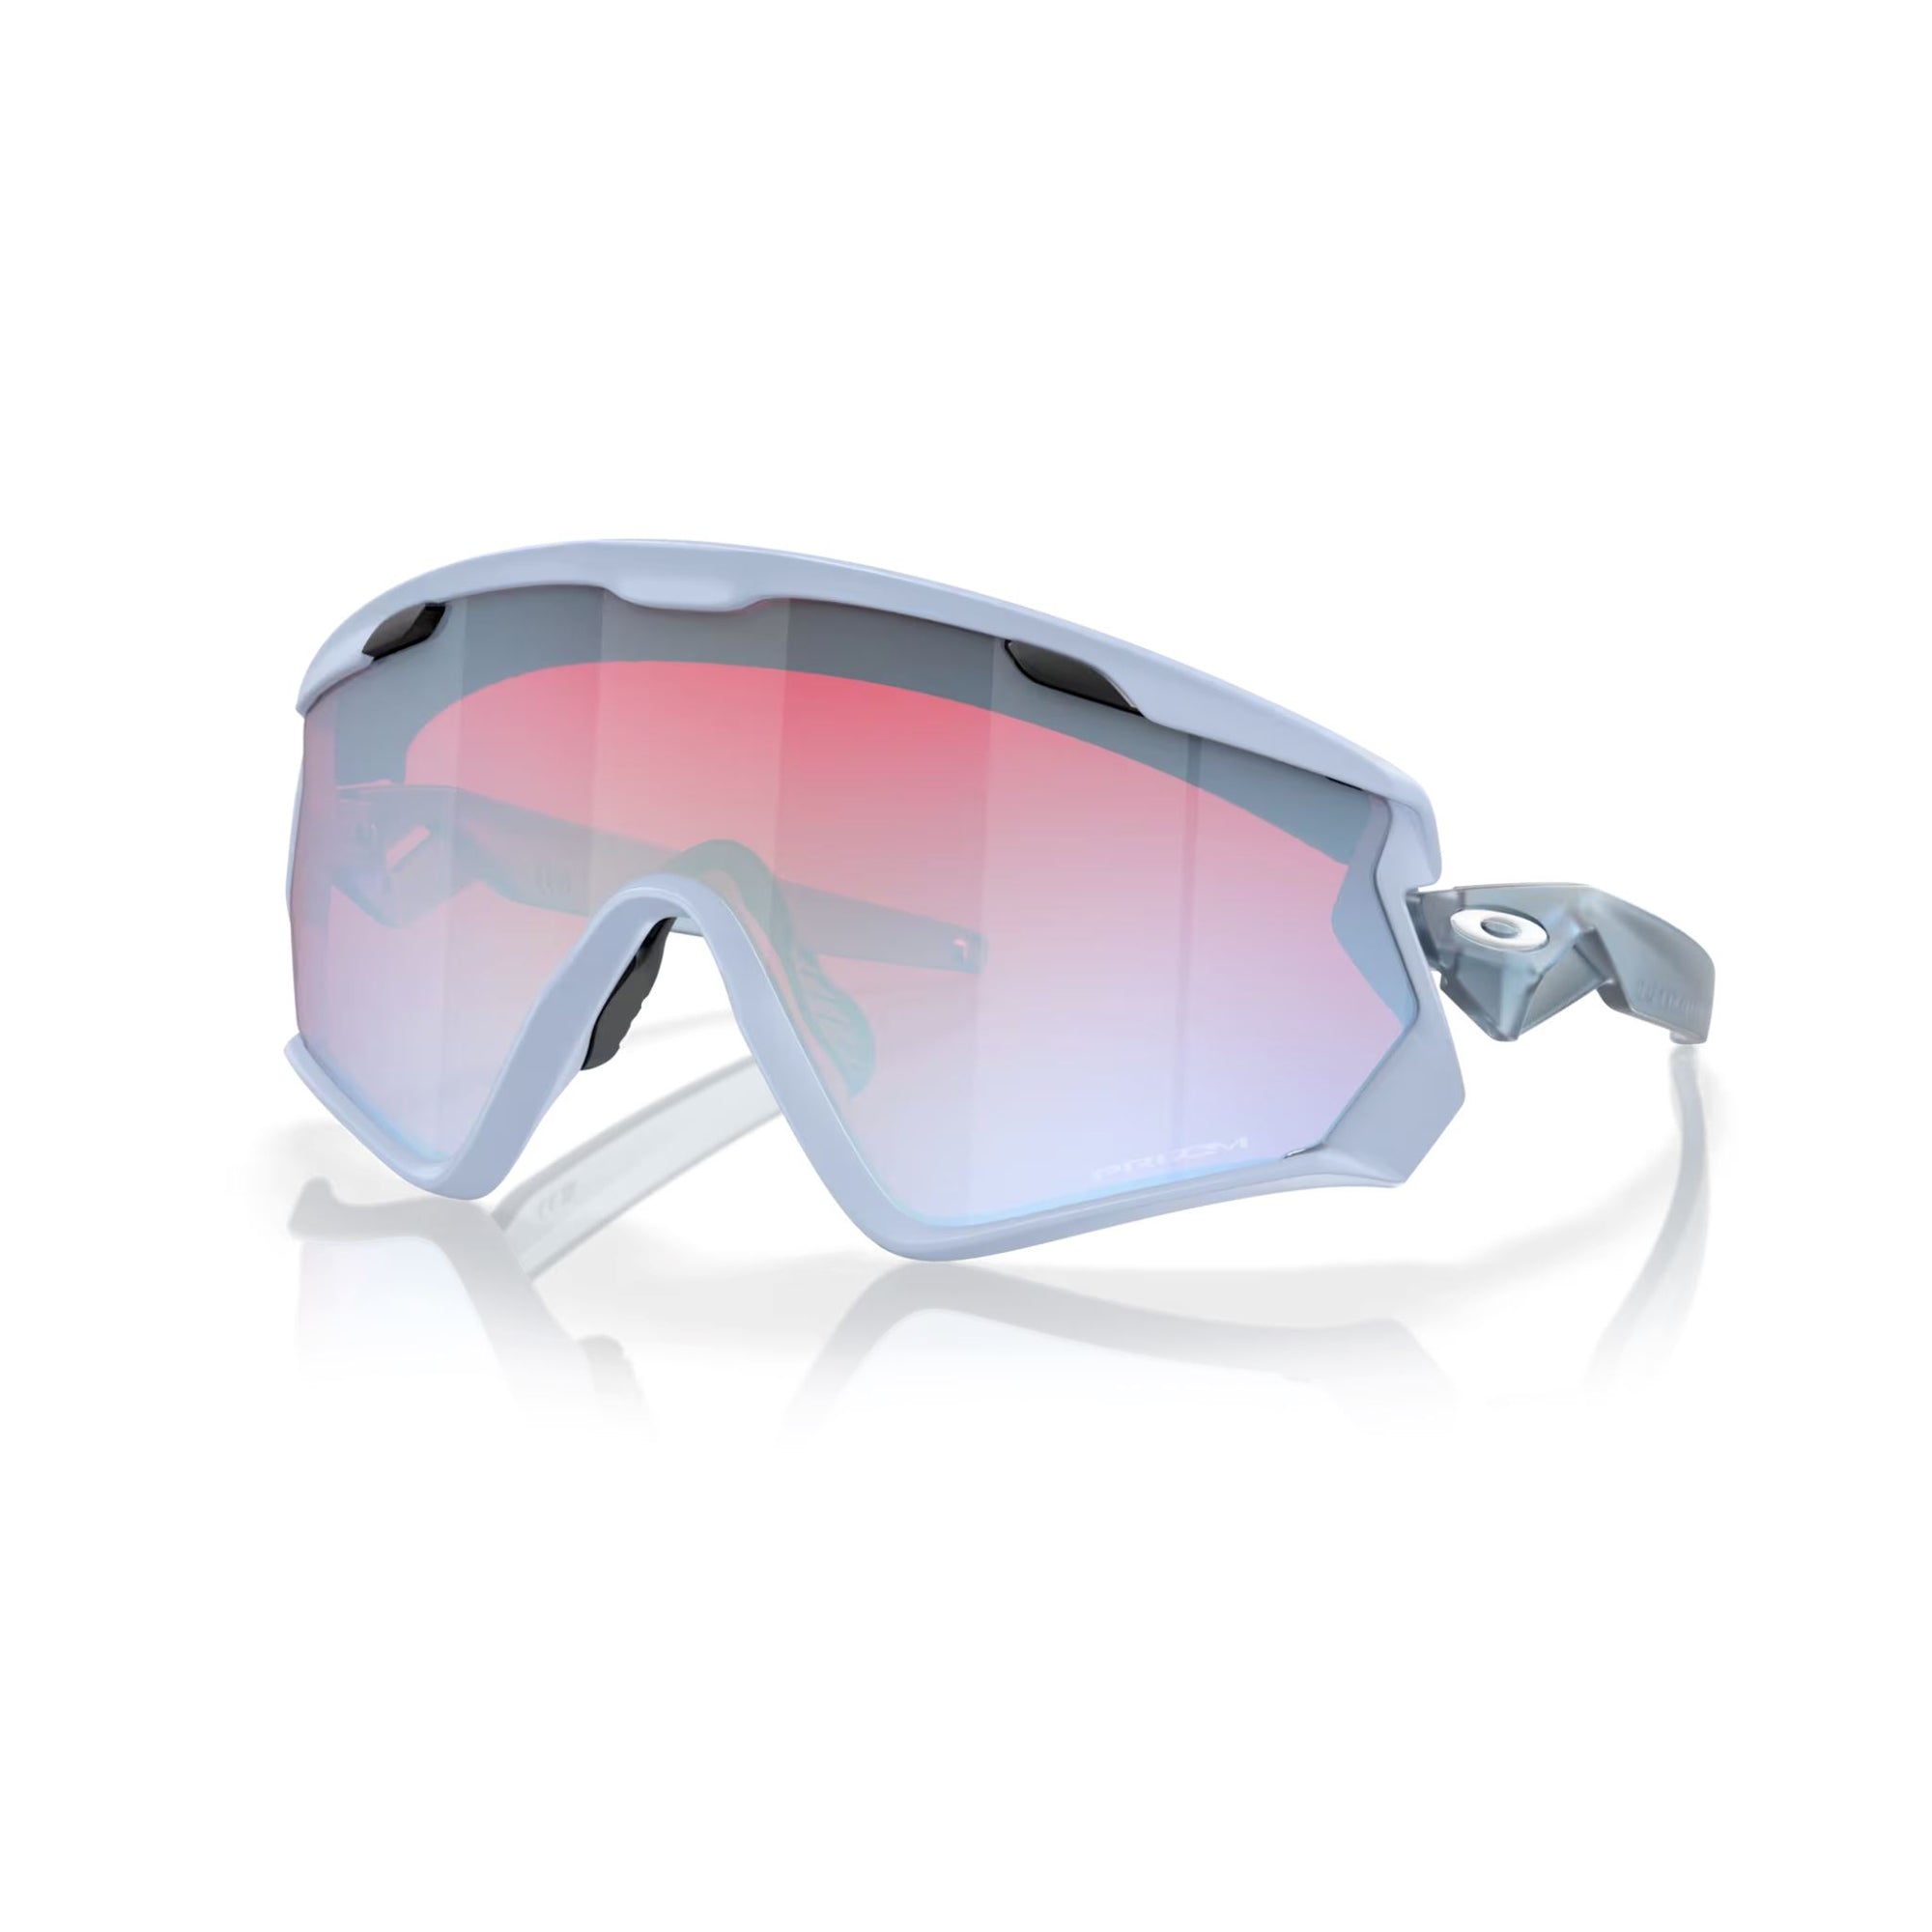 Oakley Wind Jacket 2.0 Matte Trans Stonewash Sunglasses - Prizm Snow Sapphire Sunglasses Oakley 